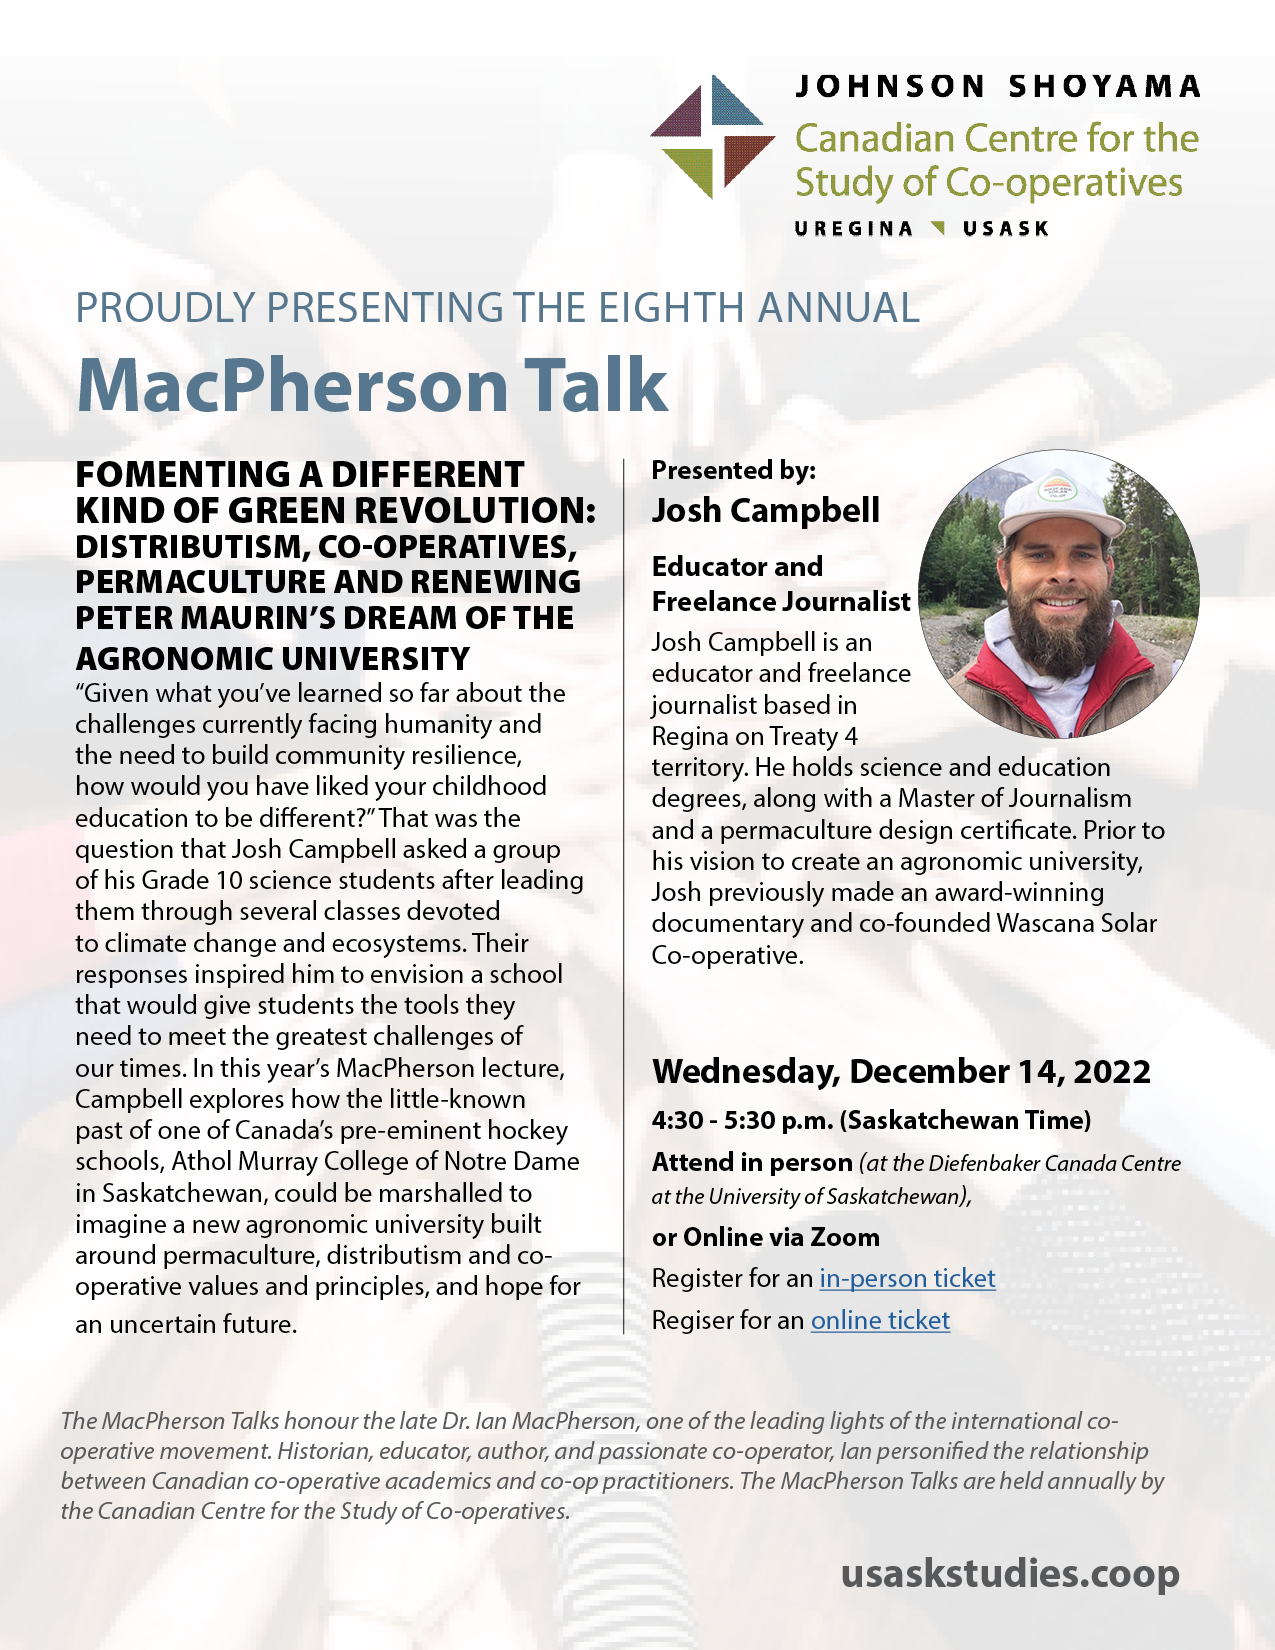 8th Annual MacPherson Talk event poster